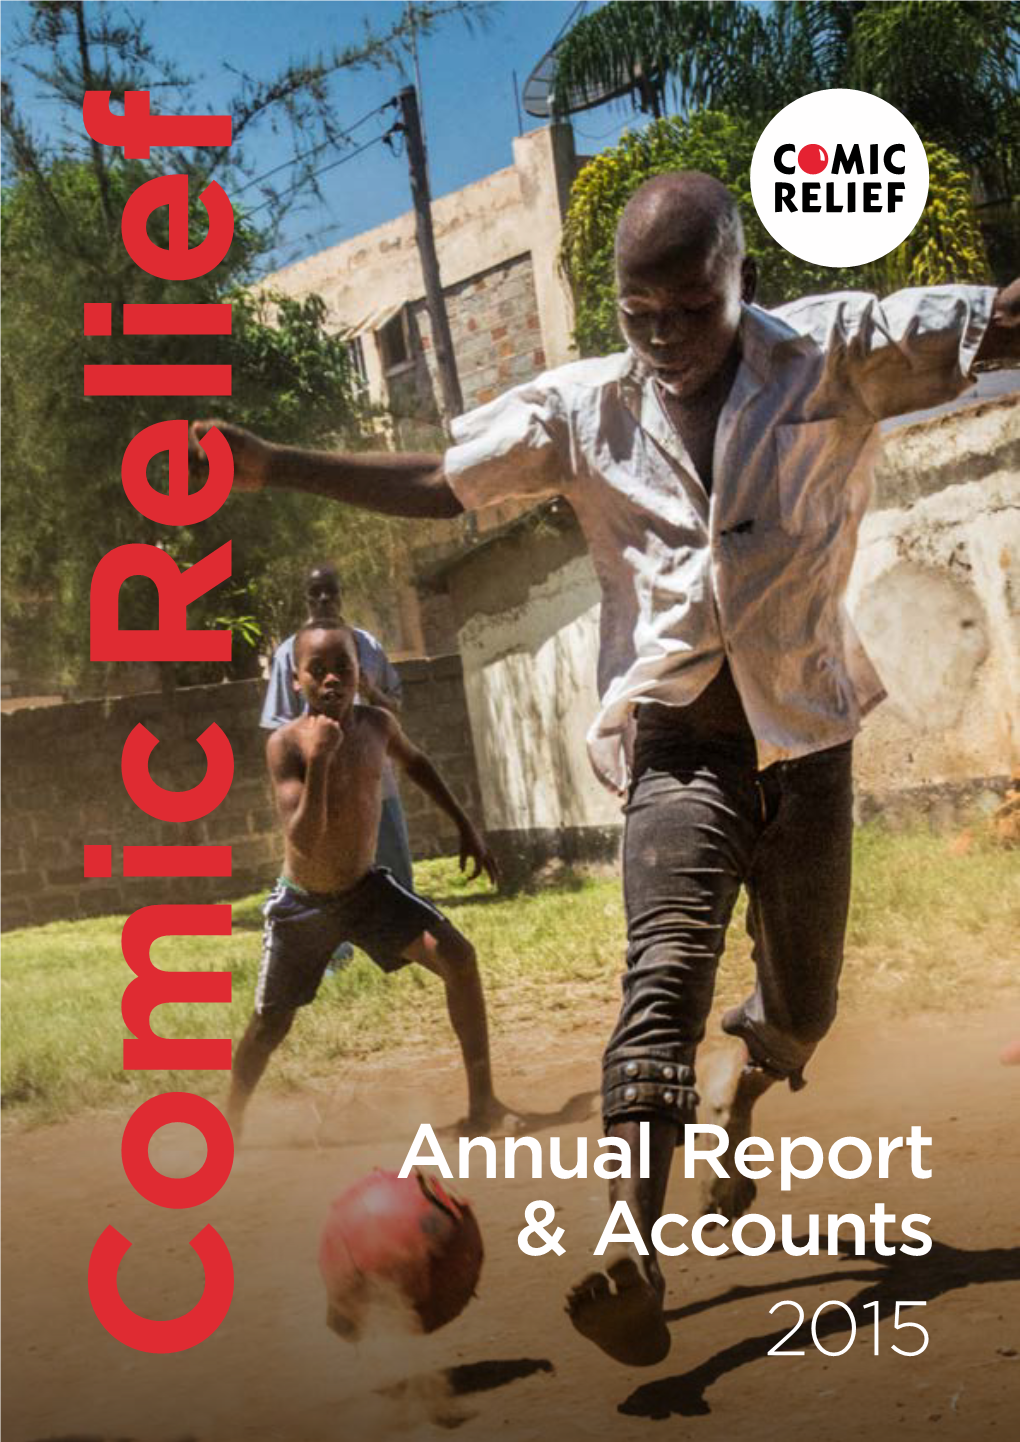 Annual Report & Accounts 2015